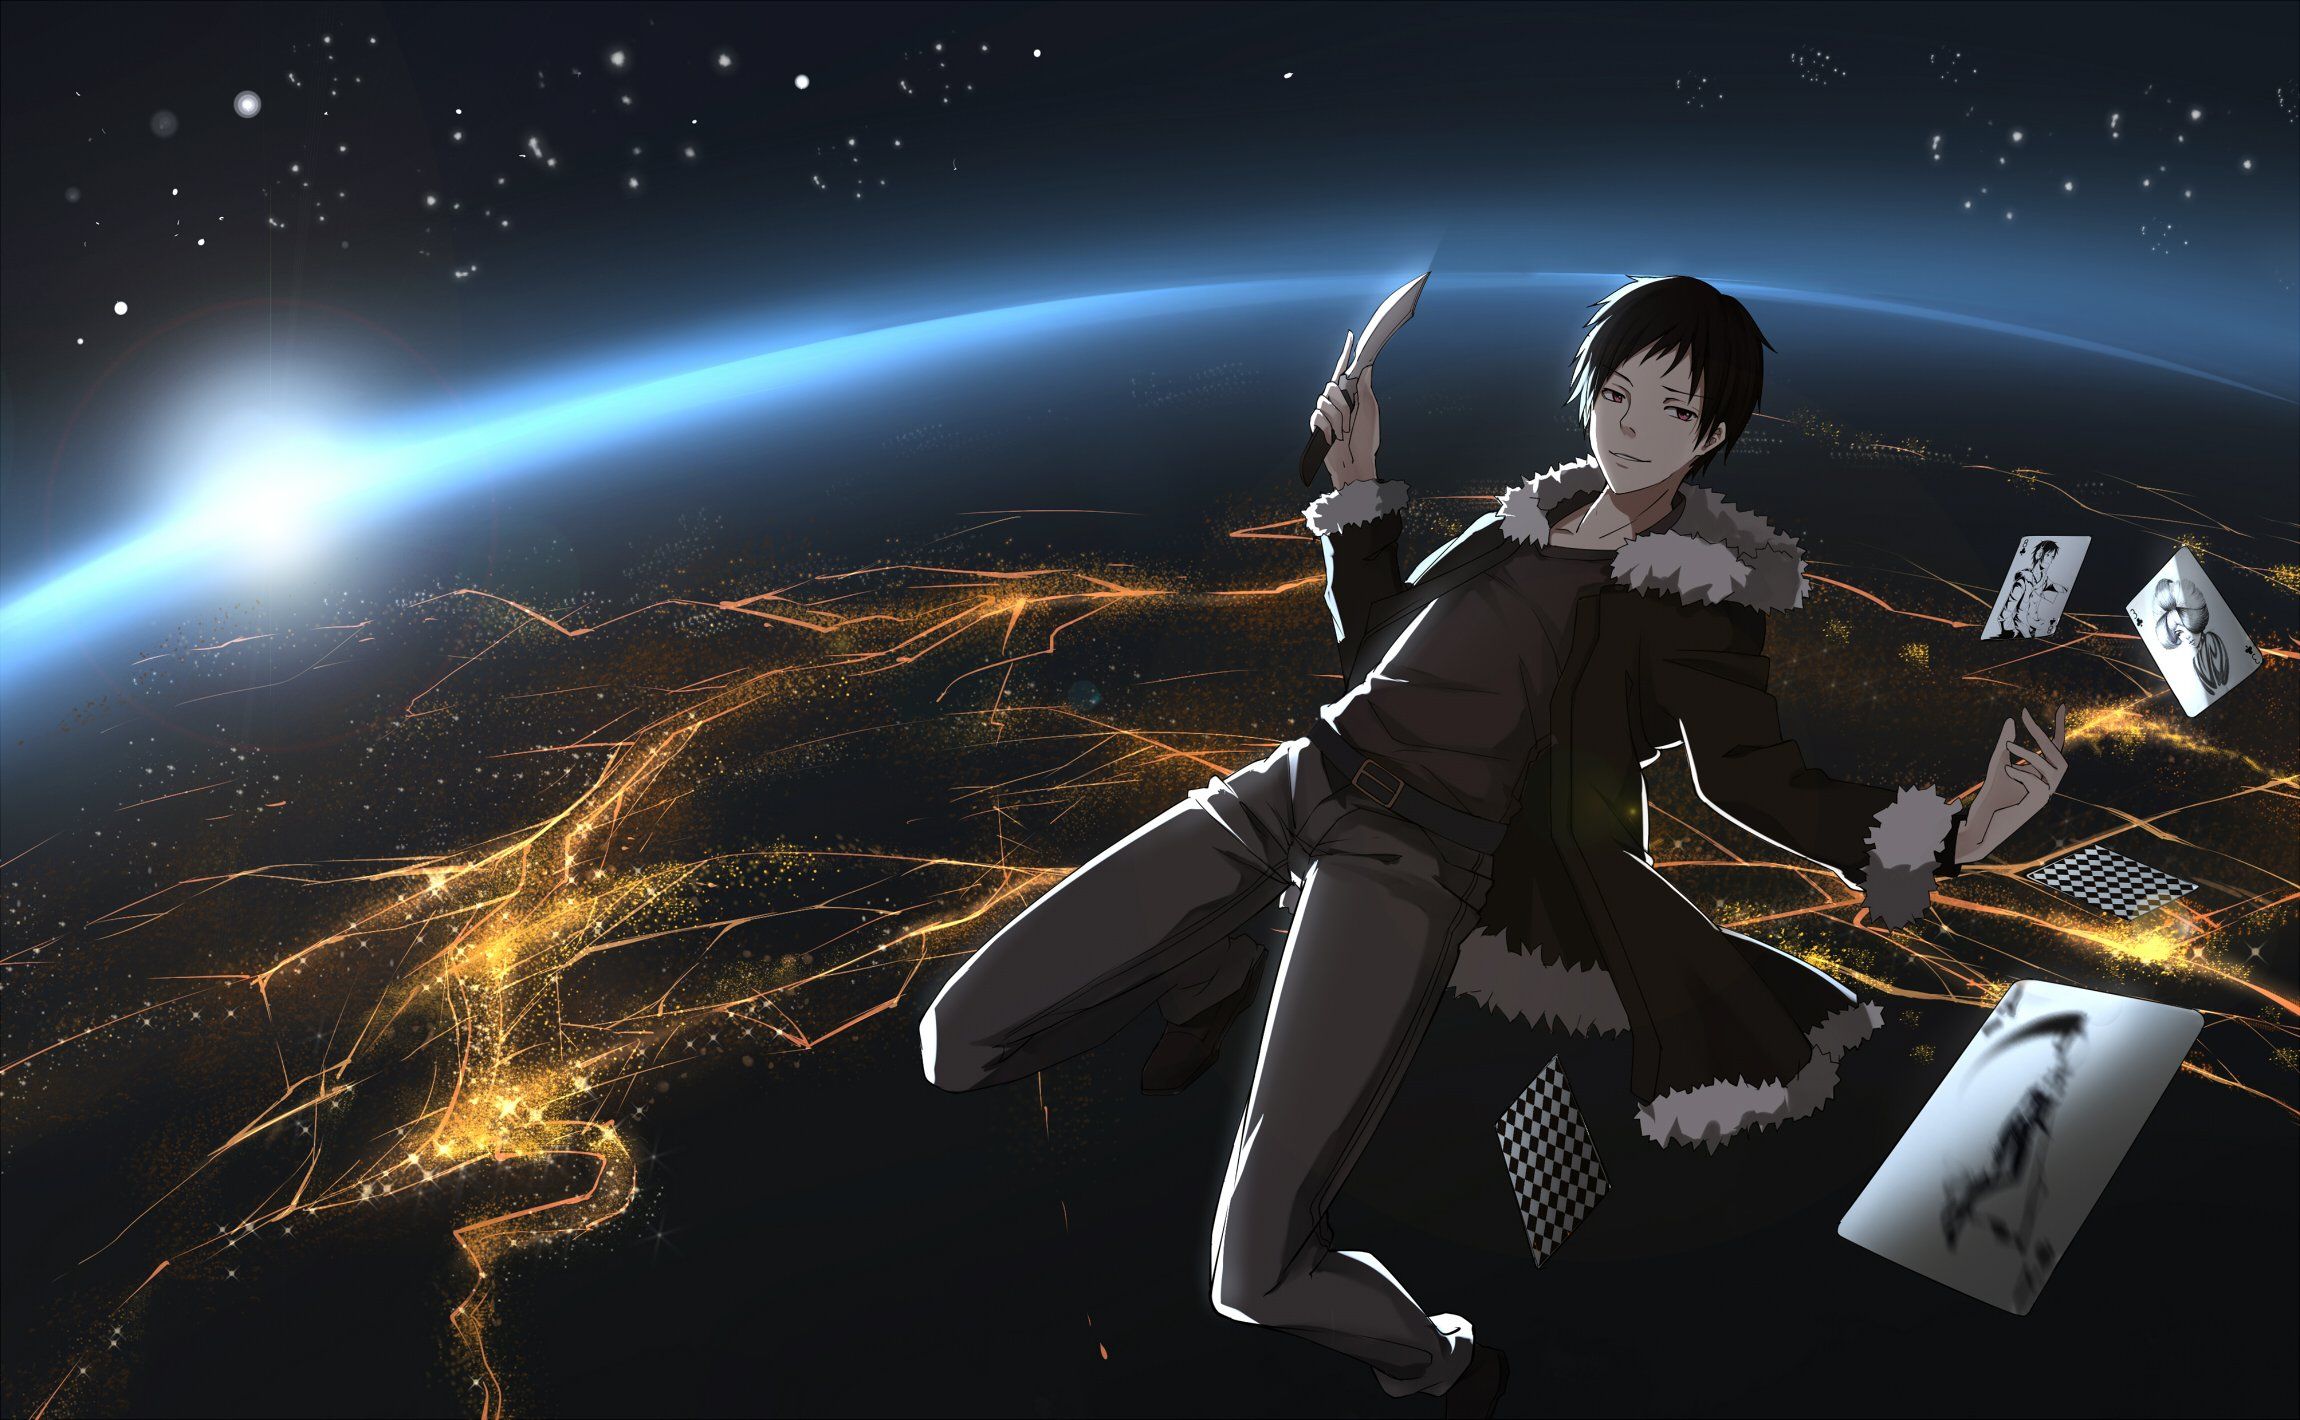 izaya wallpaper,cg artwork,anime,space,illustration,fictional character